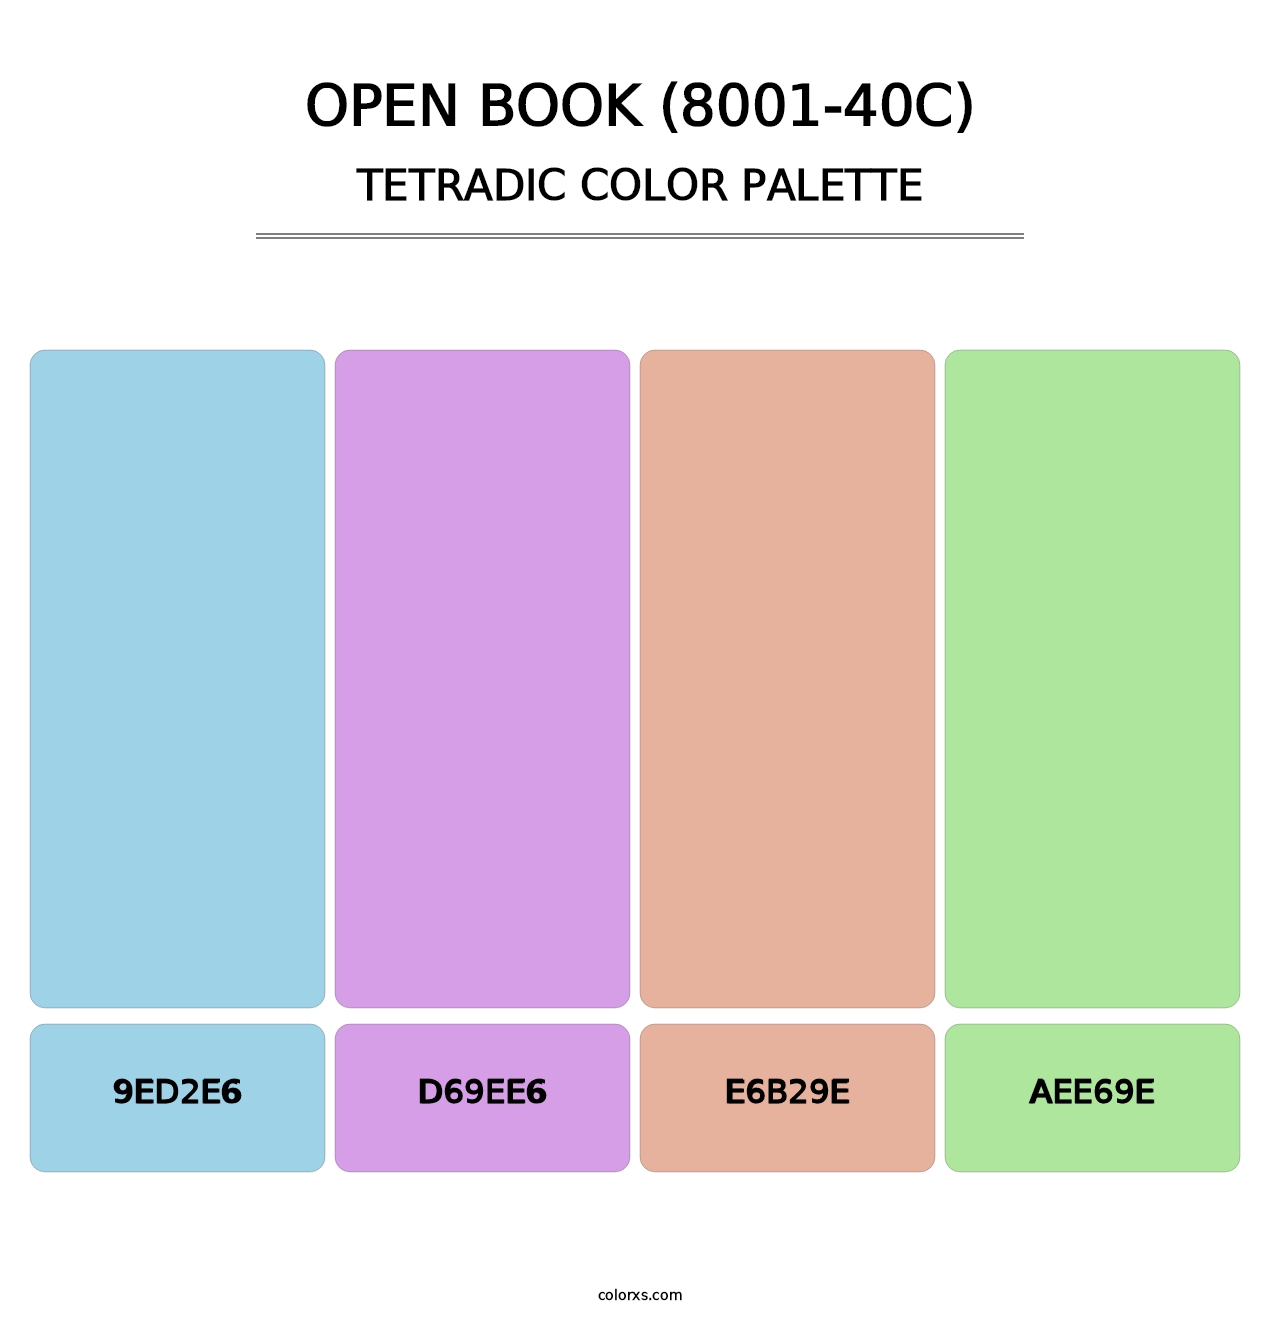 Open Book (8001-40C) - Tetradic Color Palette